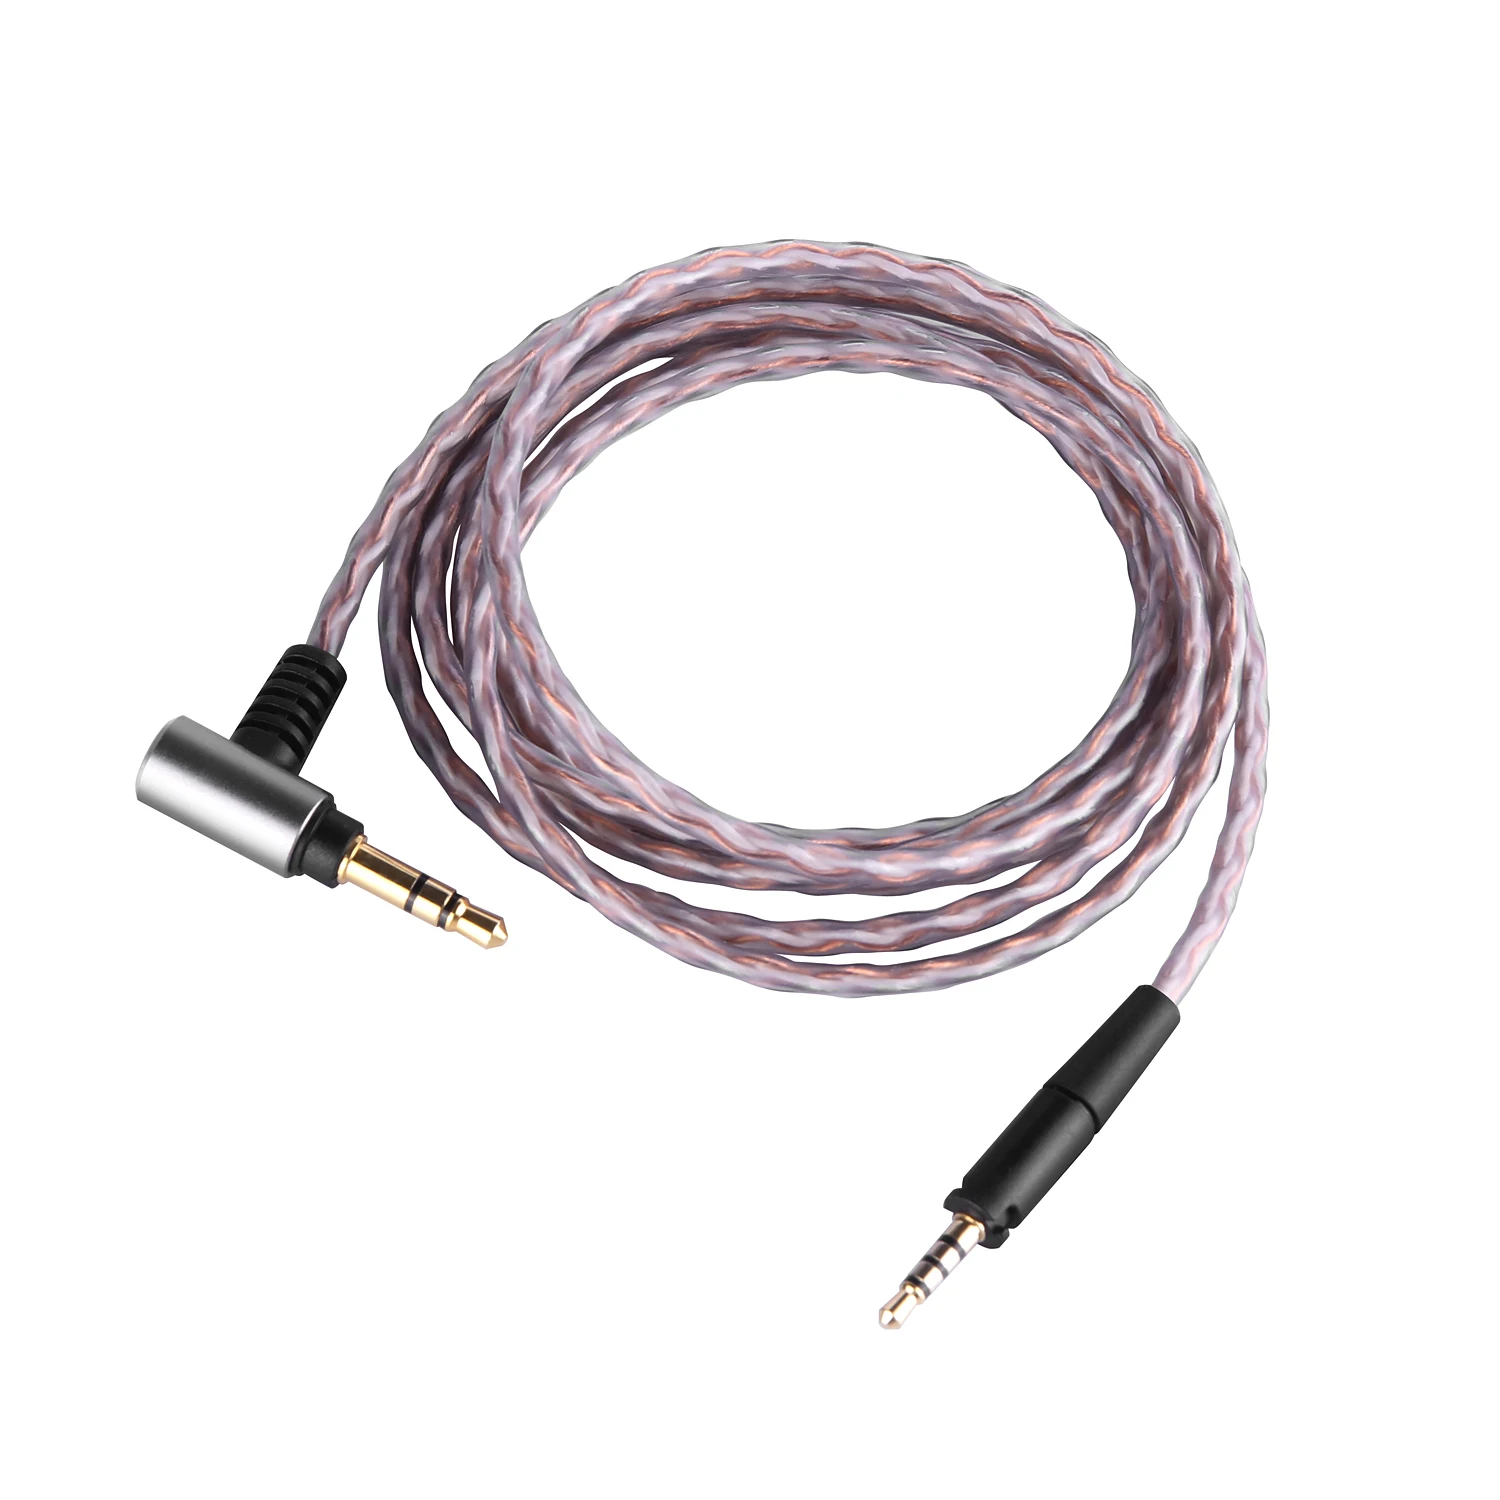 

3.5mm New OCC Audio Cable For Sennheiser HD 400S 400BT 450BT 450SE 458BT HD 4.30i HD 4.30G 4.40BT 4.50BTNC headphone